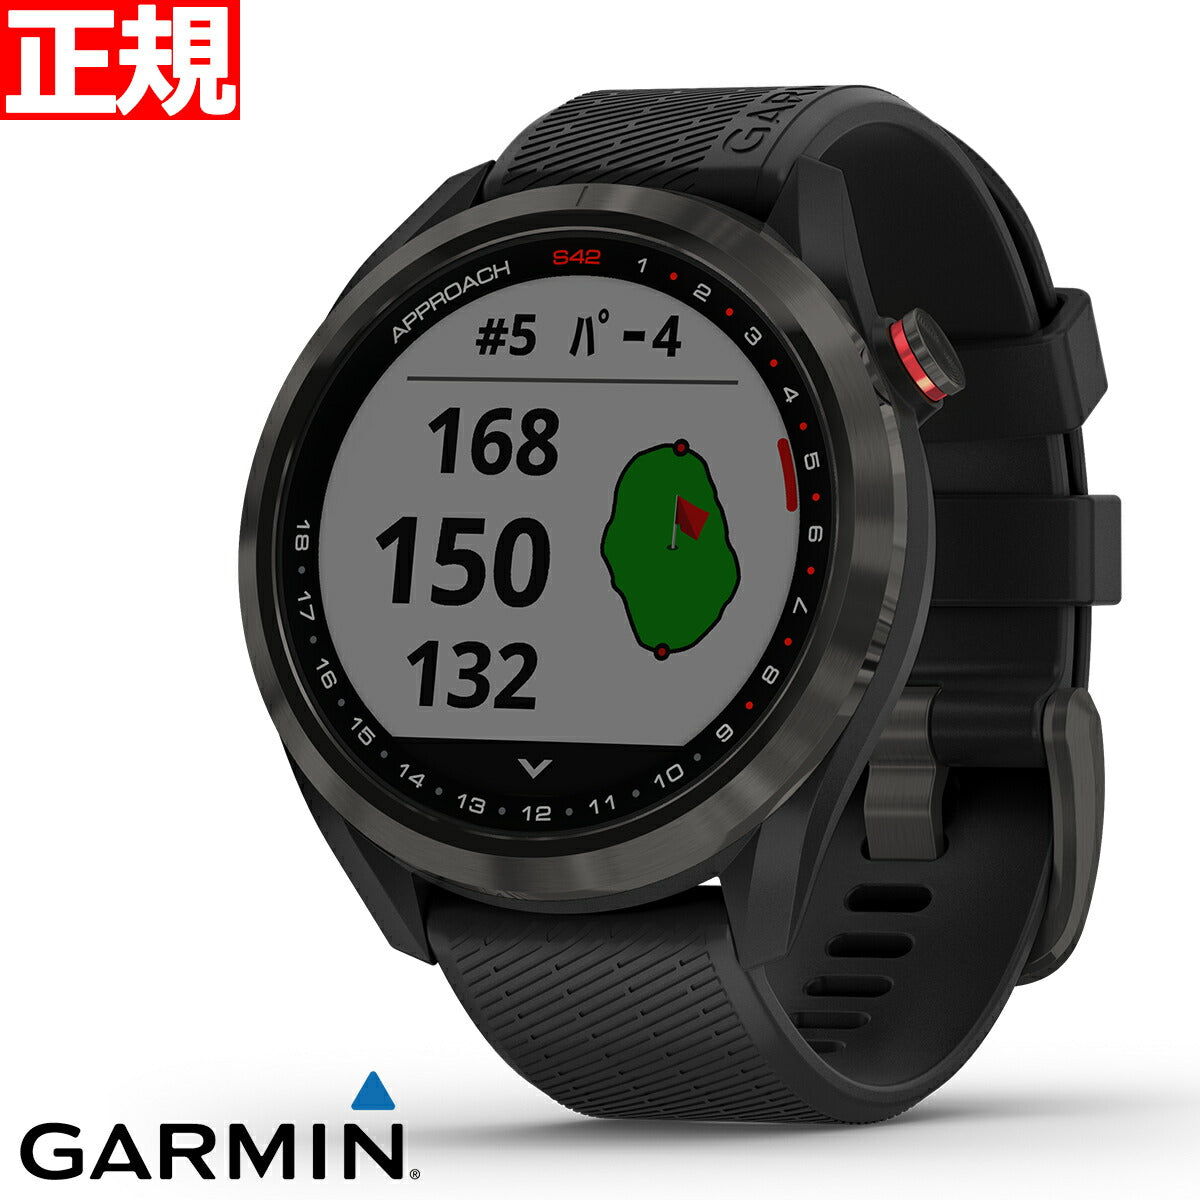 【美品1回使用】GARMIN(ガーミン) APPROACH S42 GPS腕時計